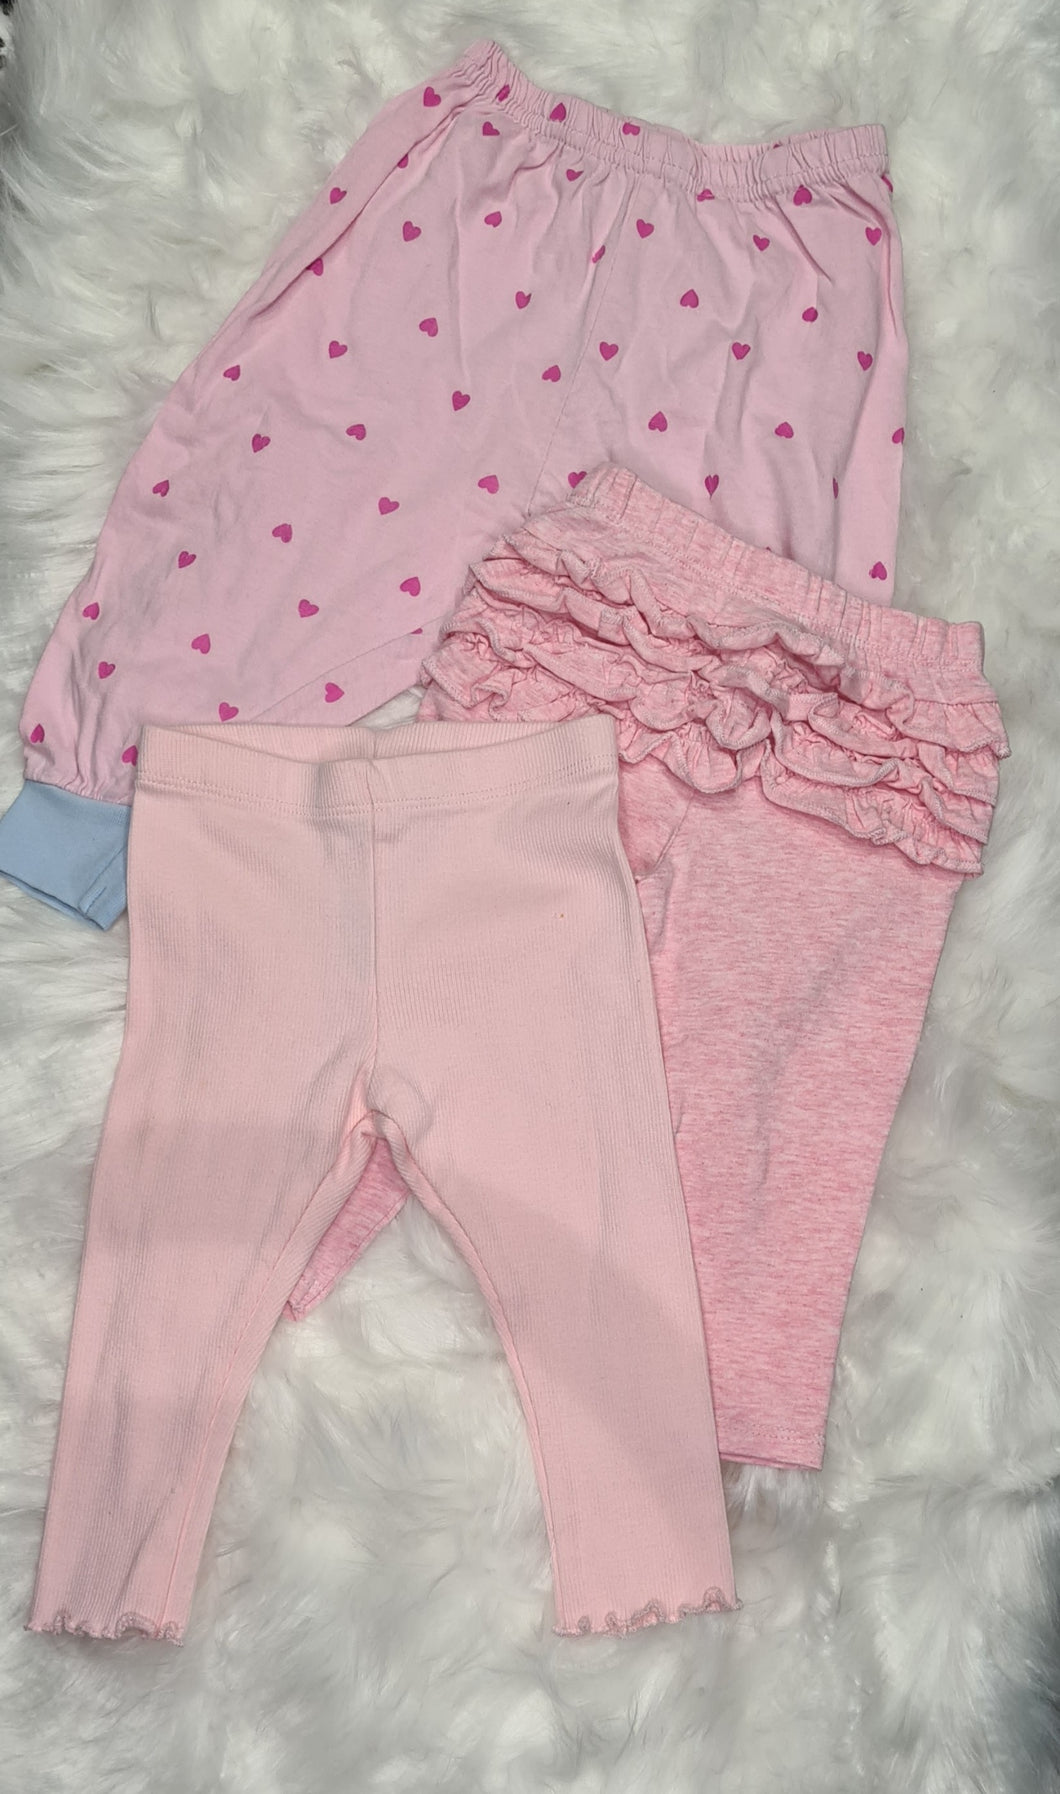 Girls 6-9 Months - Pack of 3 - Pink Leggings